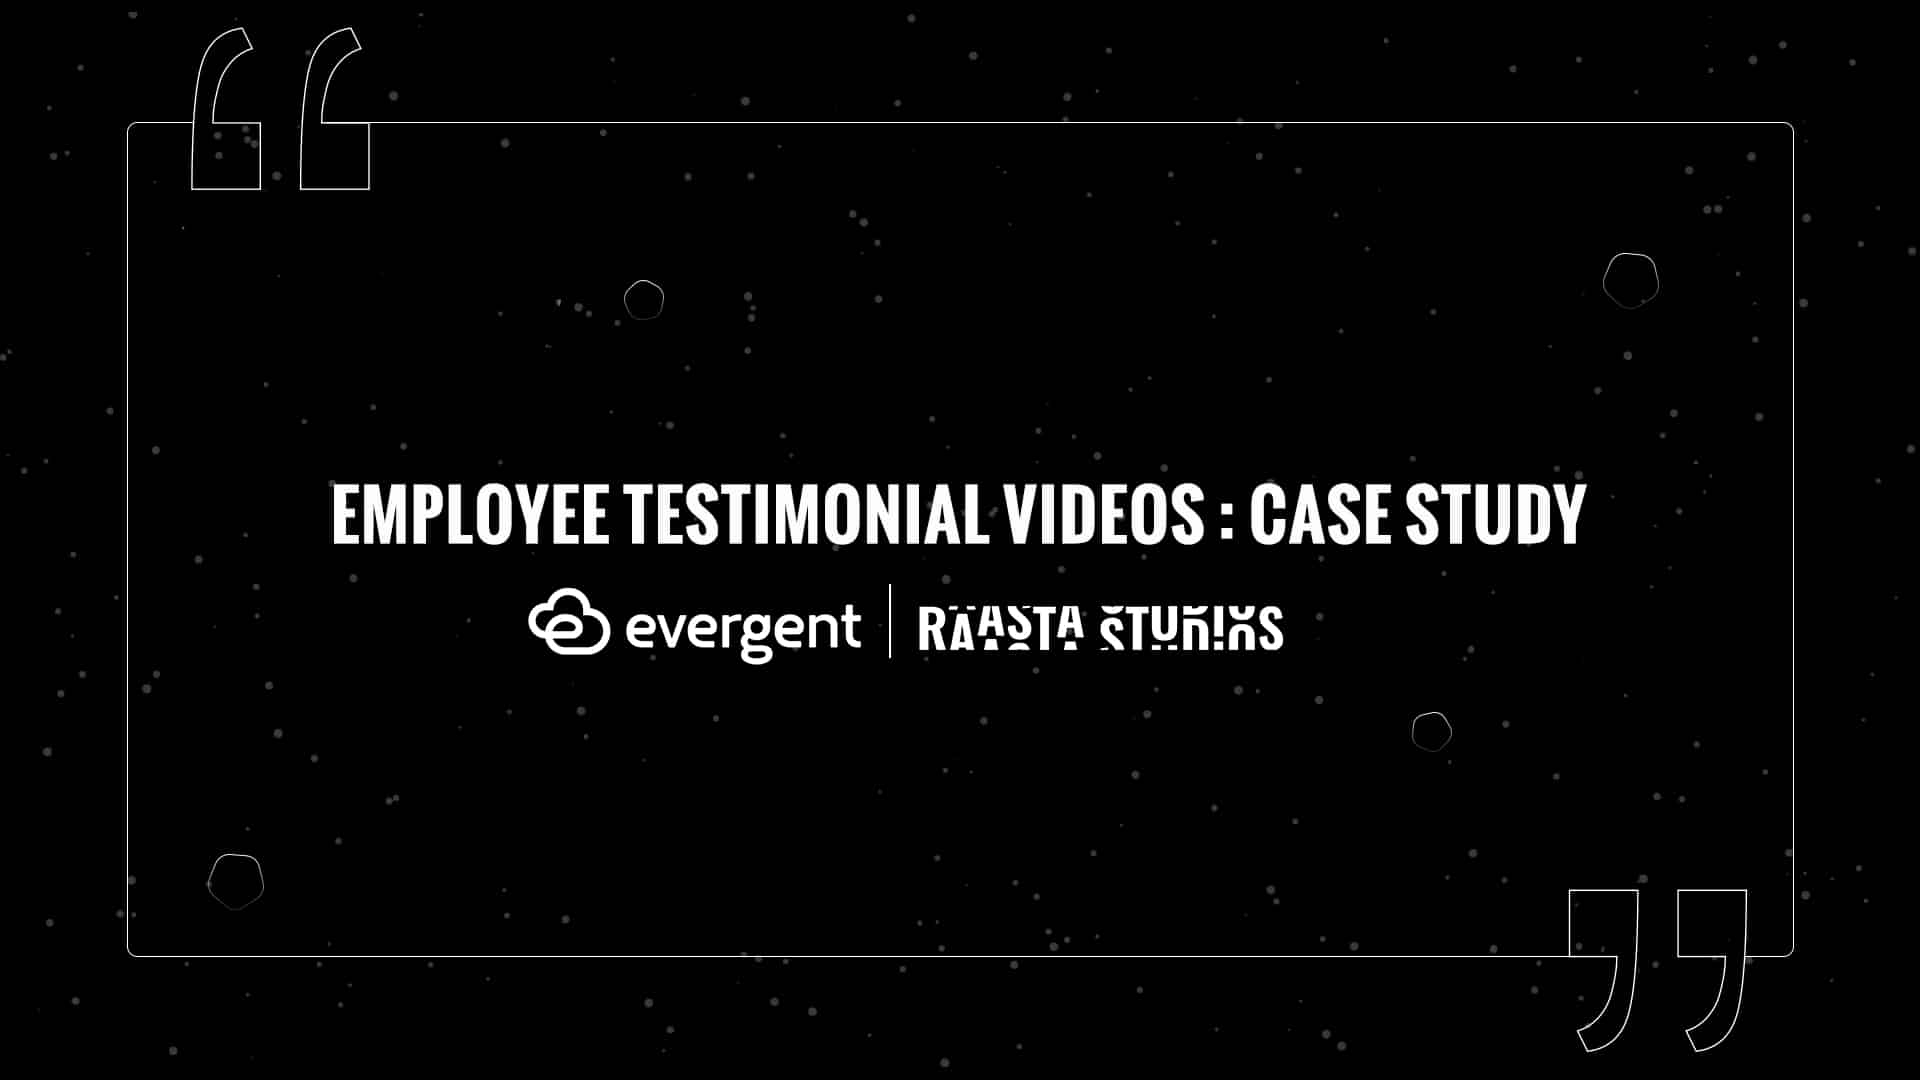 Case Study: Evergent Testimonial videos by Raasta